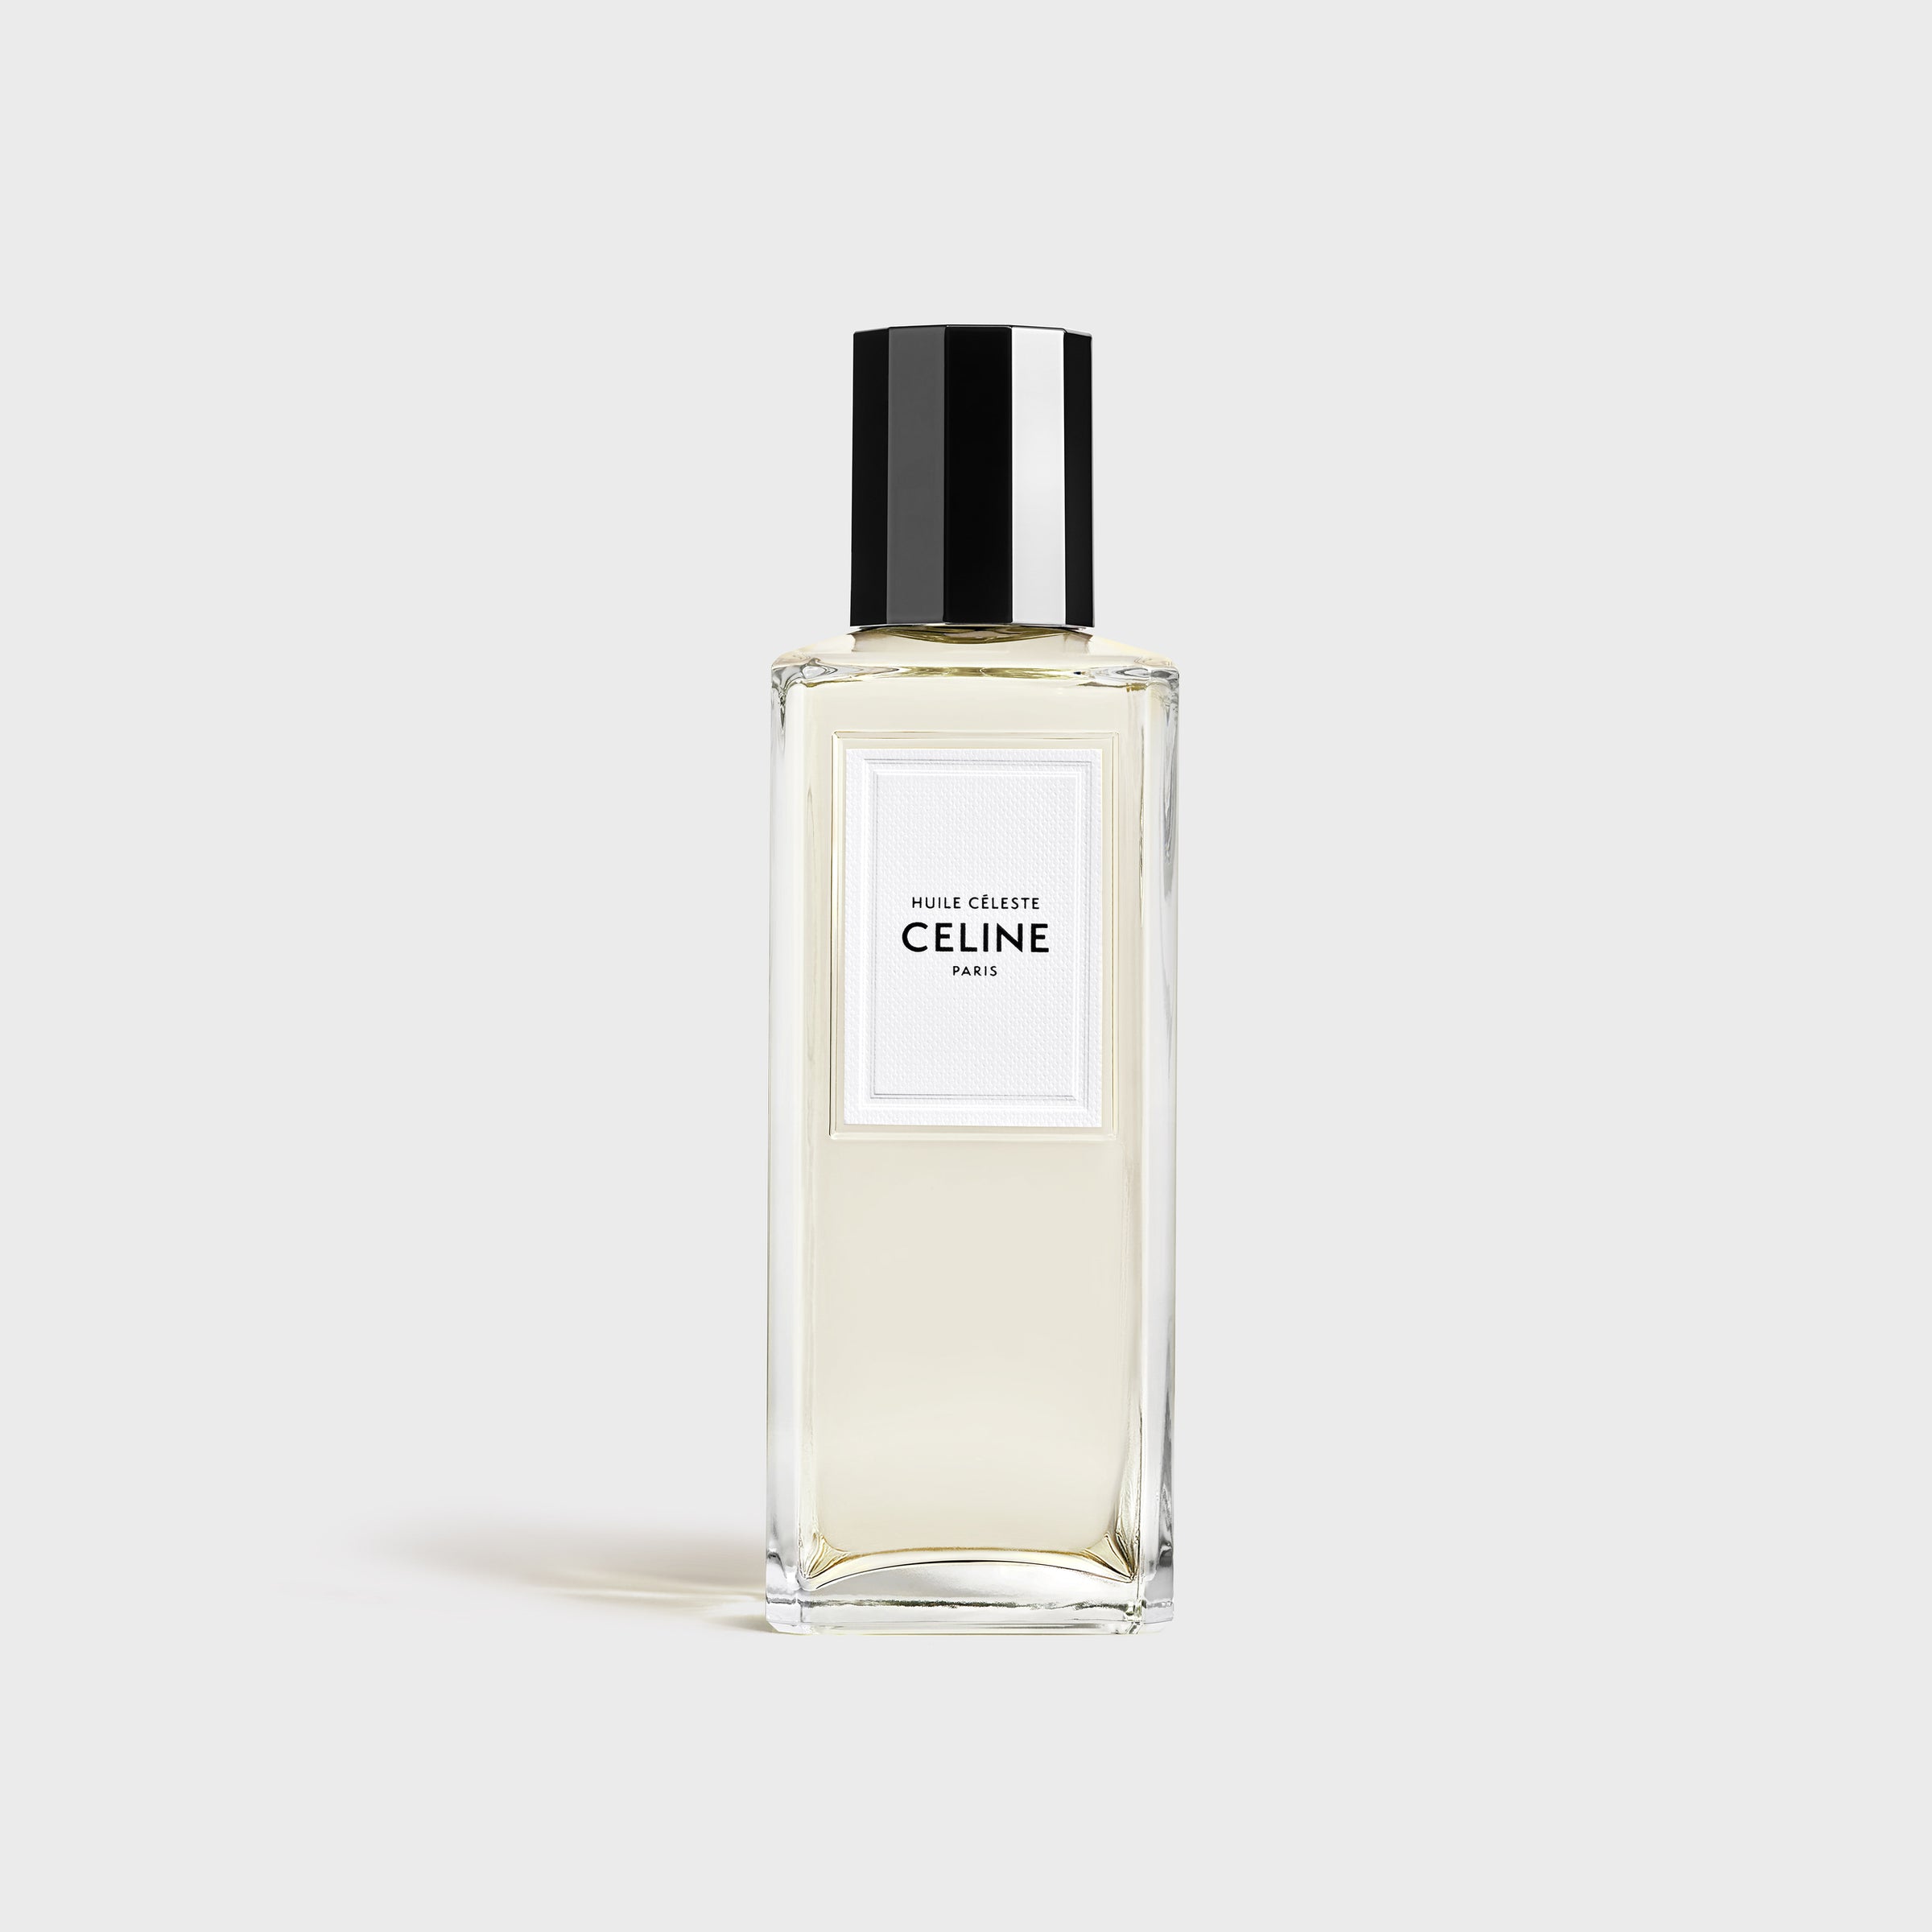 Xịt Thơm CELINE Huile Céleste Perfumed Oil For Body And Hair #250 mL